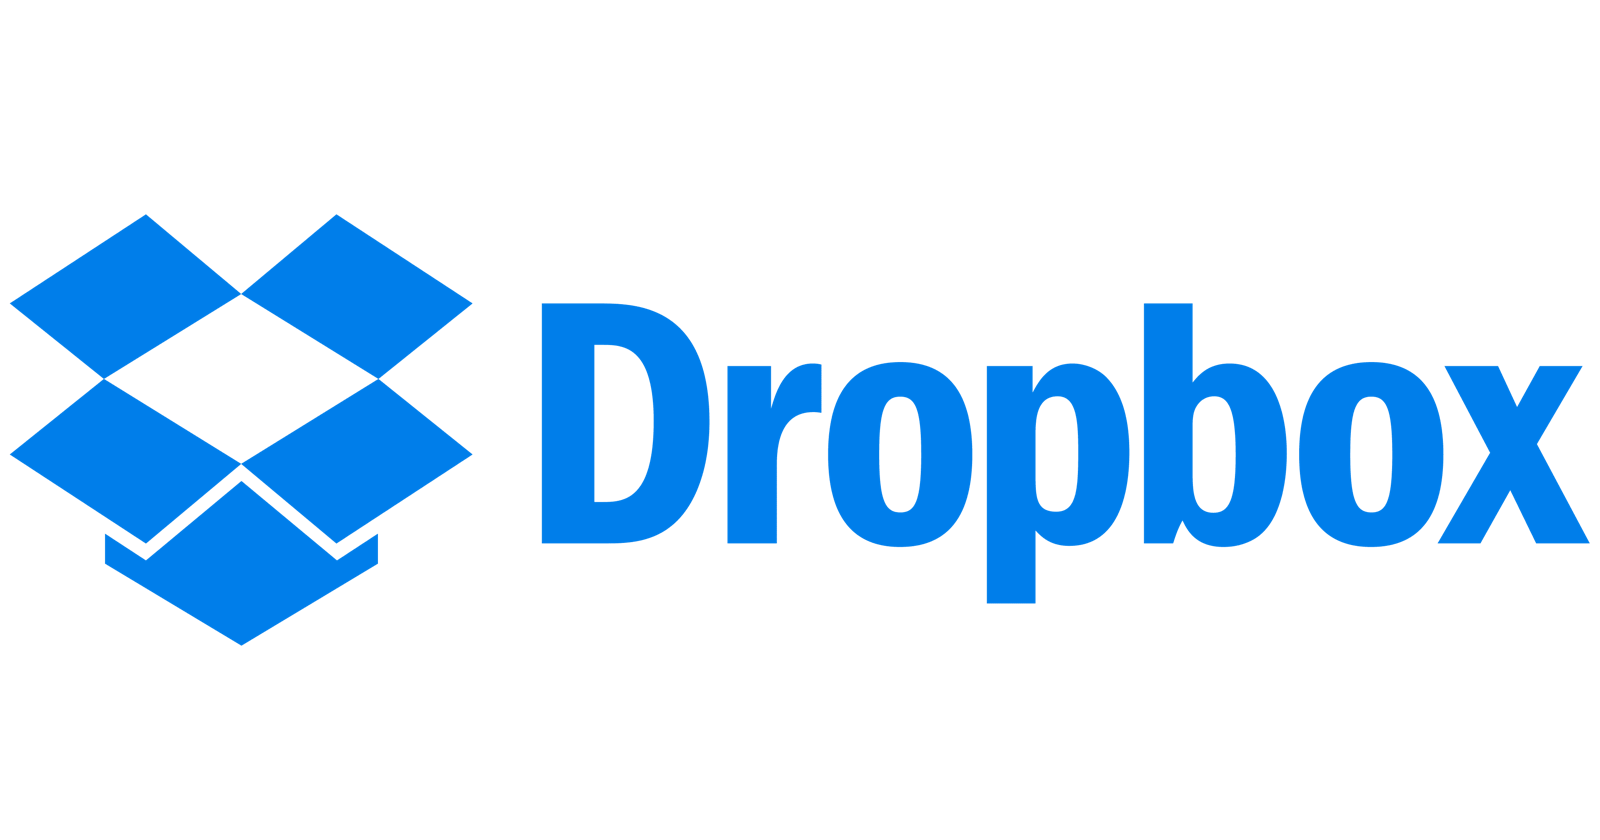 Design (LLD) a file sharing system like Dropbox - Machine Coding